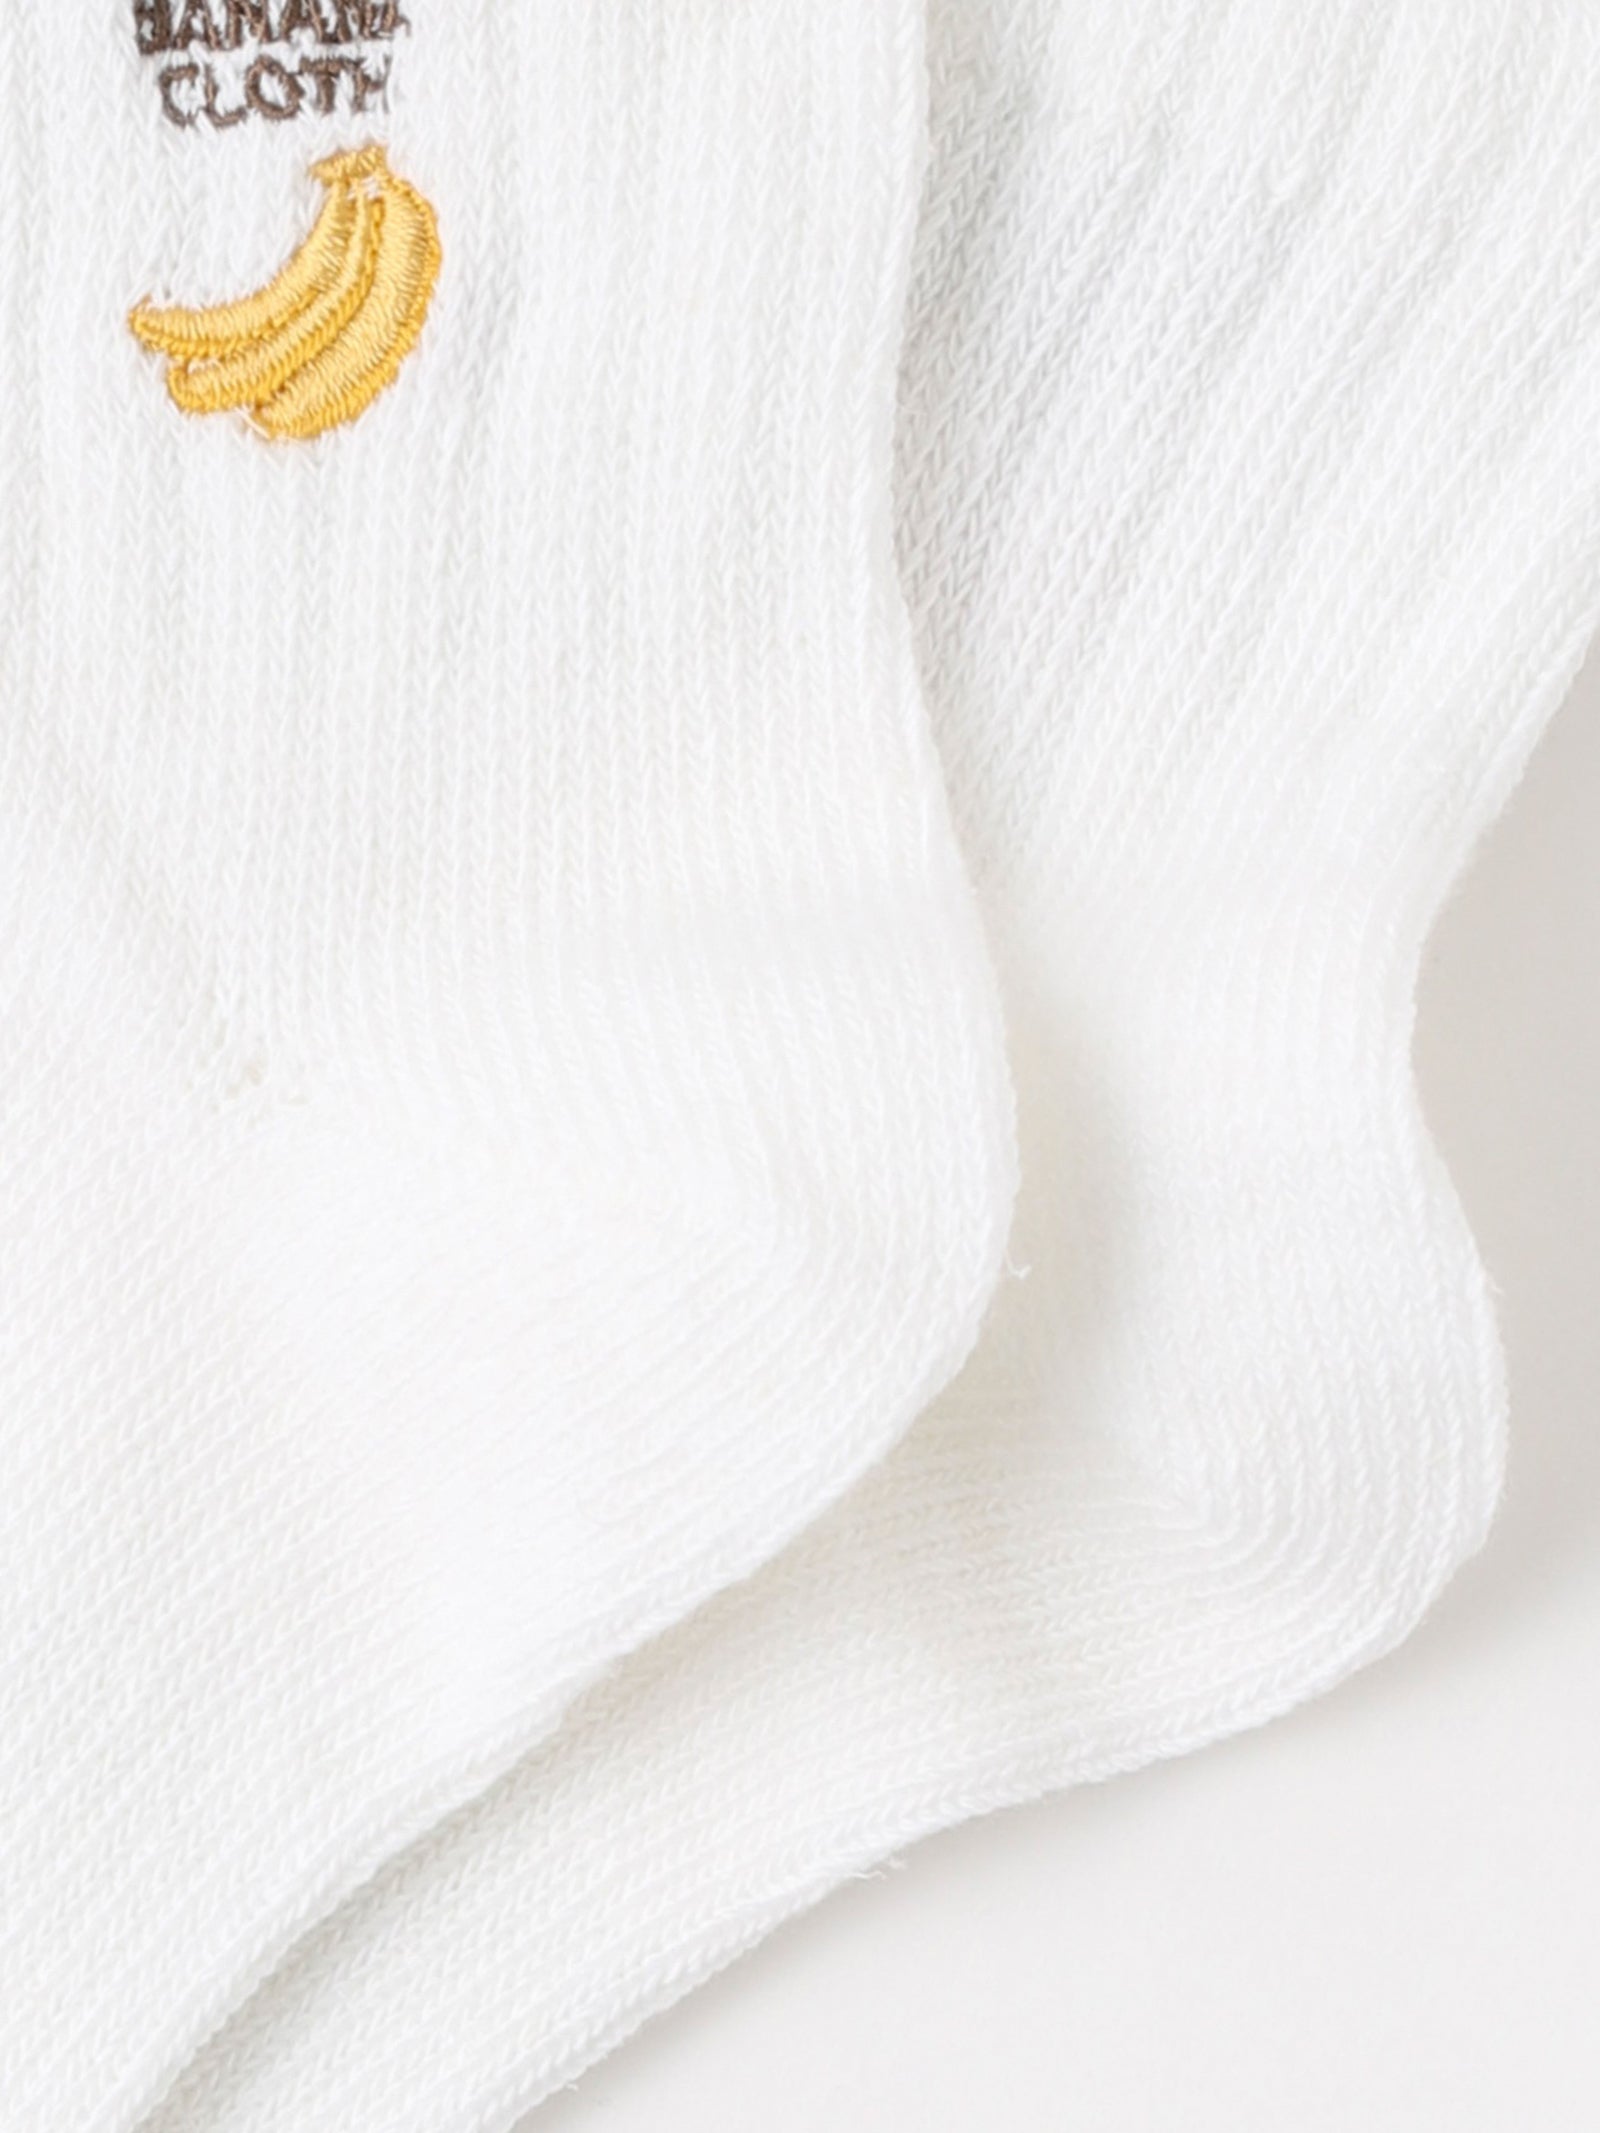 BANANA CLOTH ソックス <br> バナナのミニ刺繍が可愛い